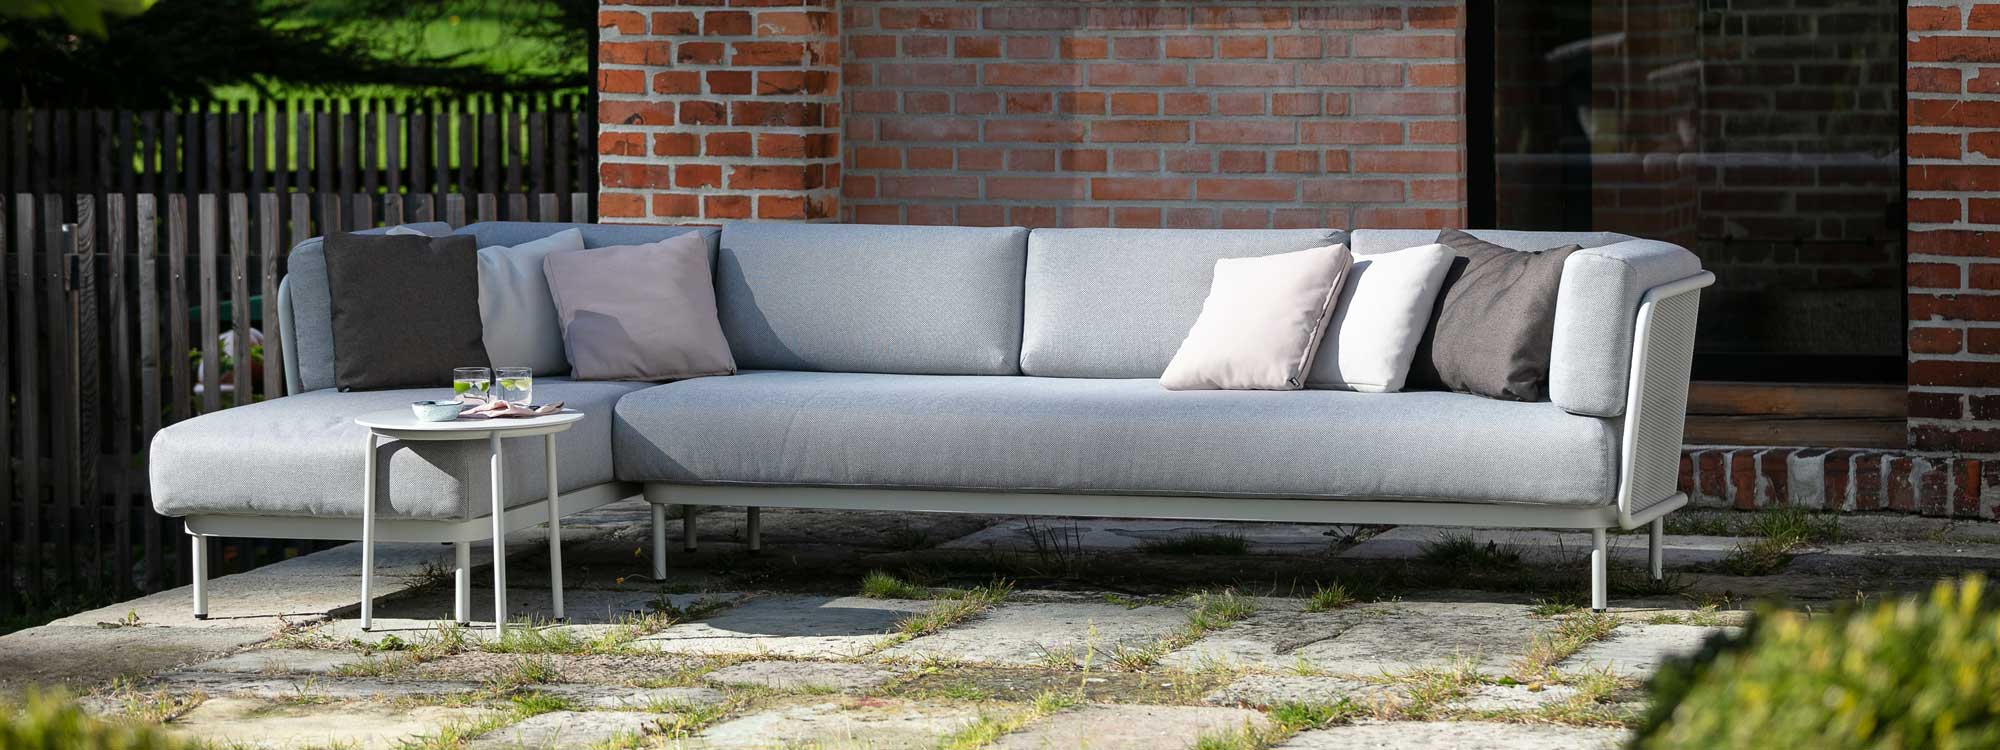 Baza modular garden sofa is a modern outdoor lounge set in high quality garden furniture materials by Todus stainless steel garden furniture